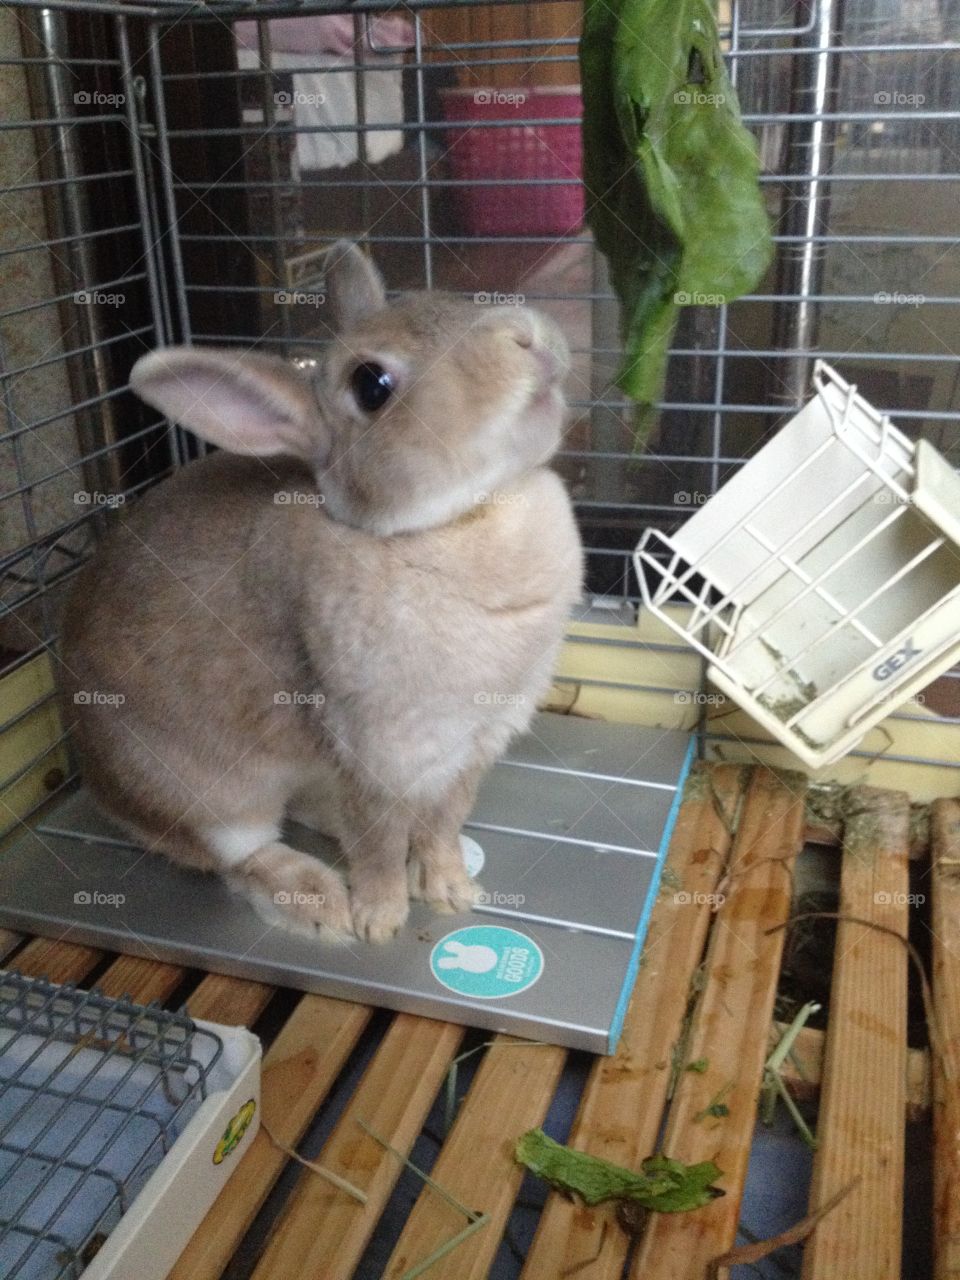 rabbit eating cabbage